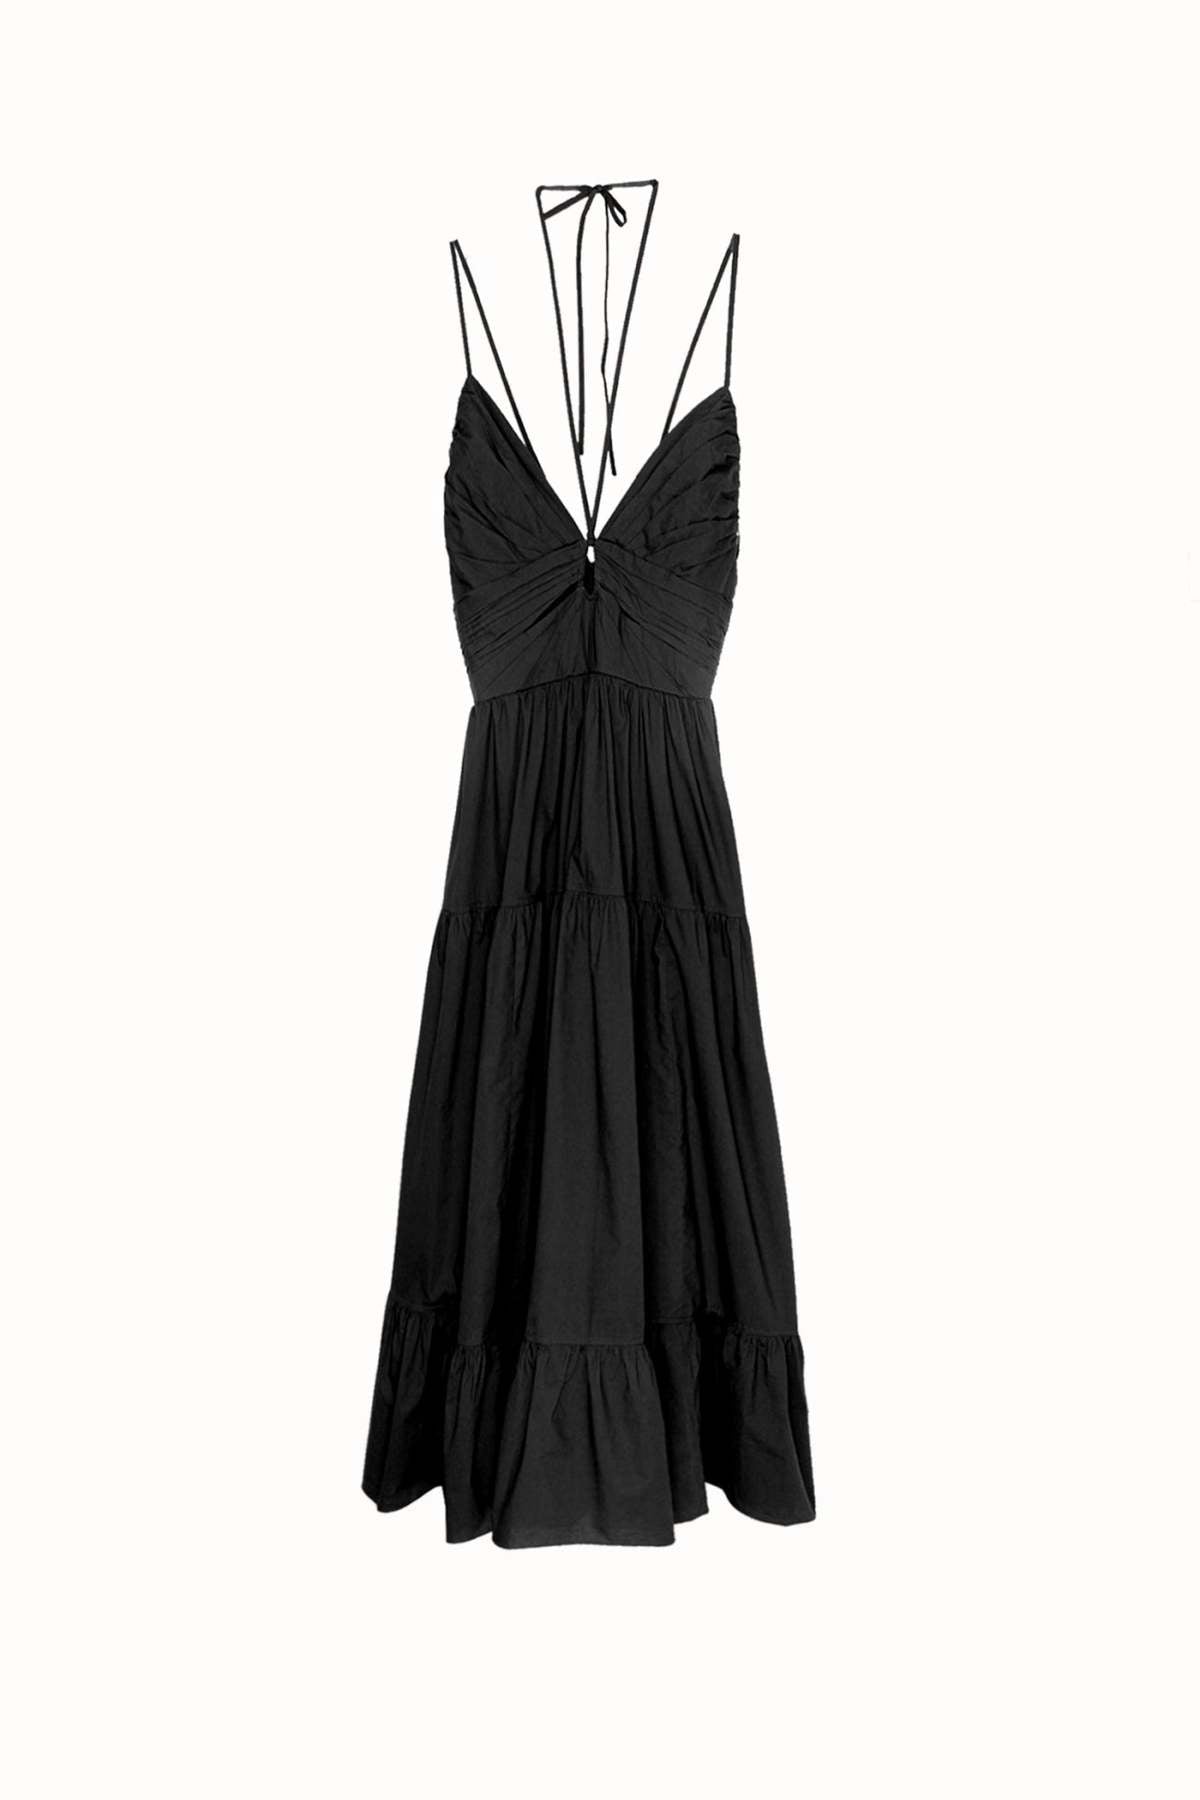 Phoebe Dress in Black